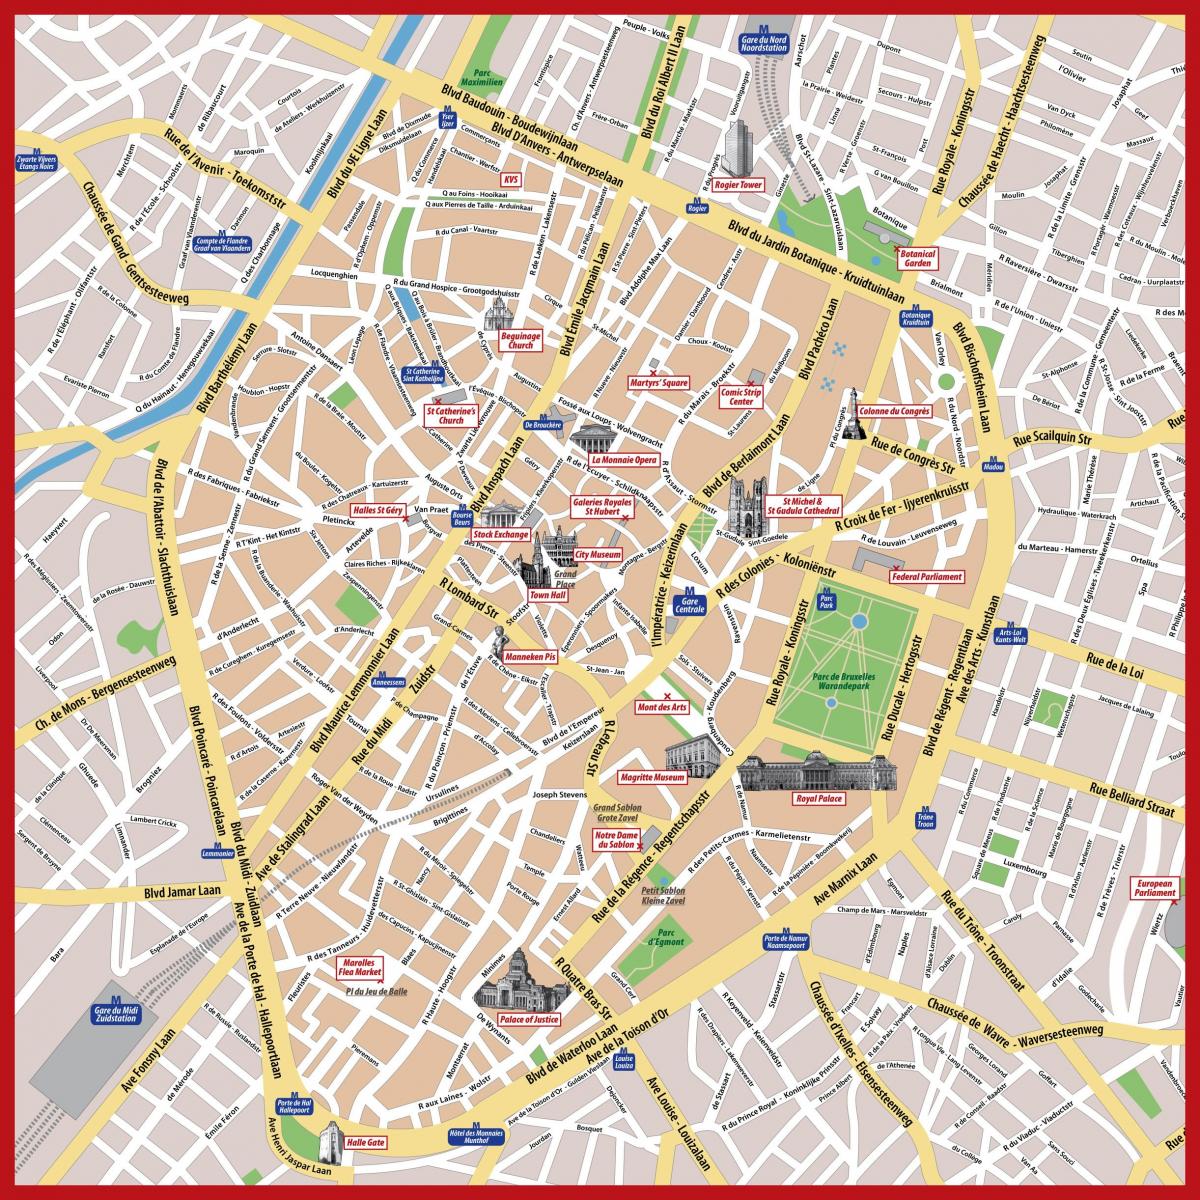 Brussel-wandeling kaart